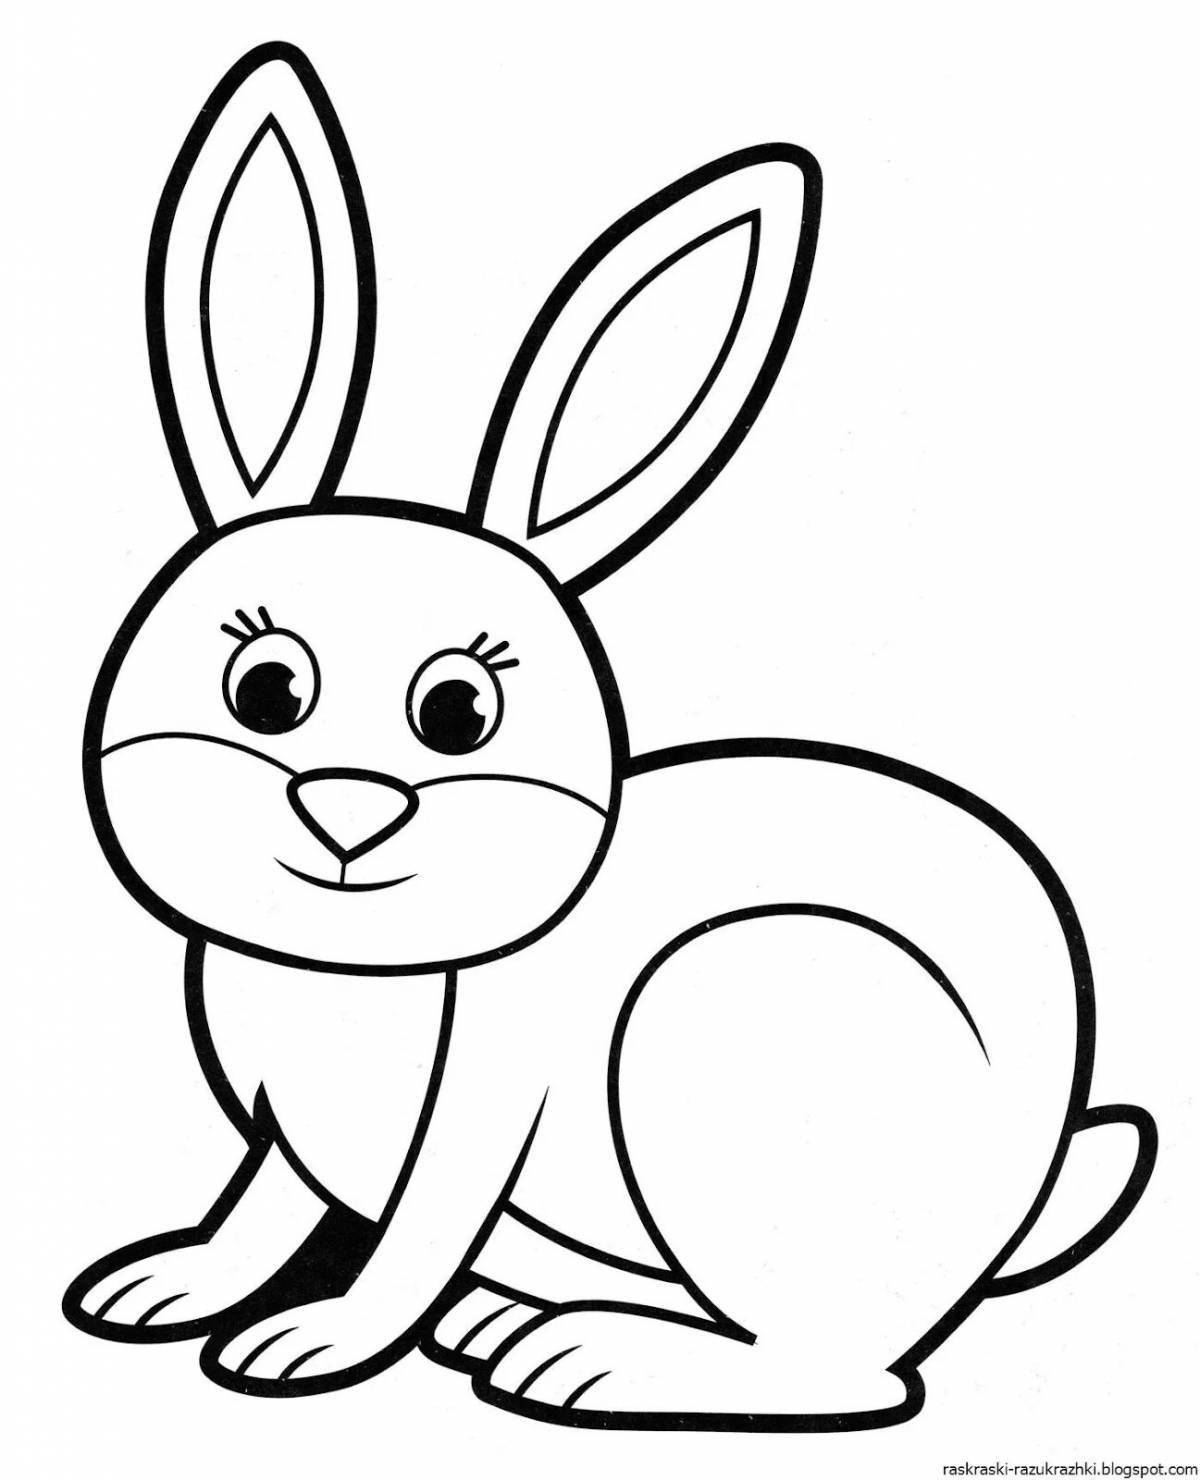 Coloring big-nosed rabbit